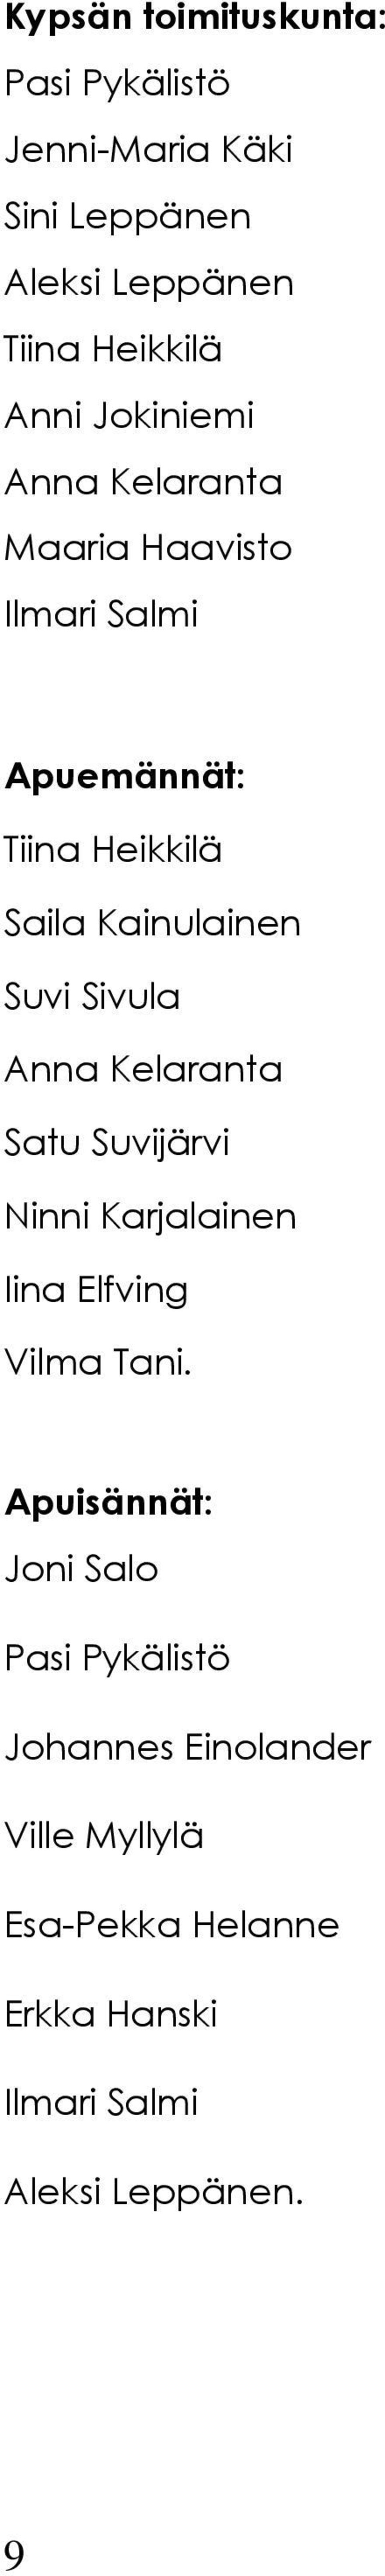 Sivula Anna Kelaranta Satu Suvijärvi Ninni Karjalainen Iina Elfving Vilma Tani.